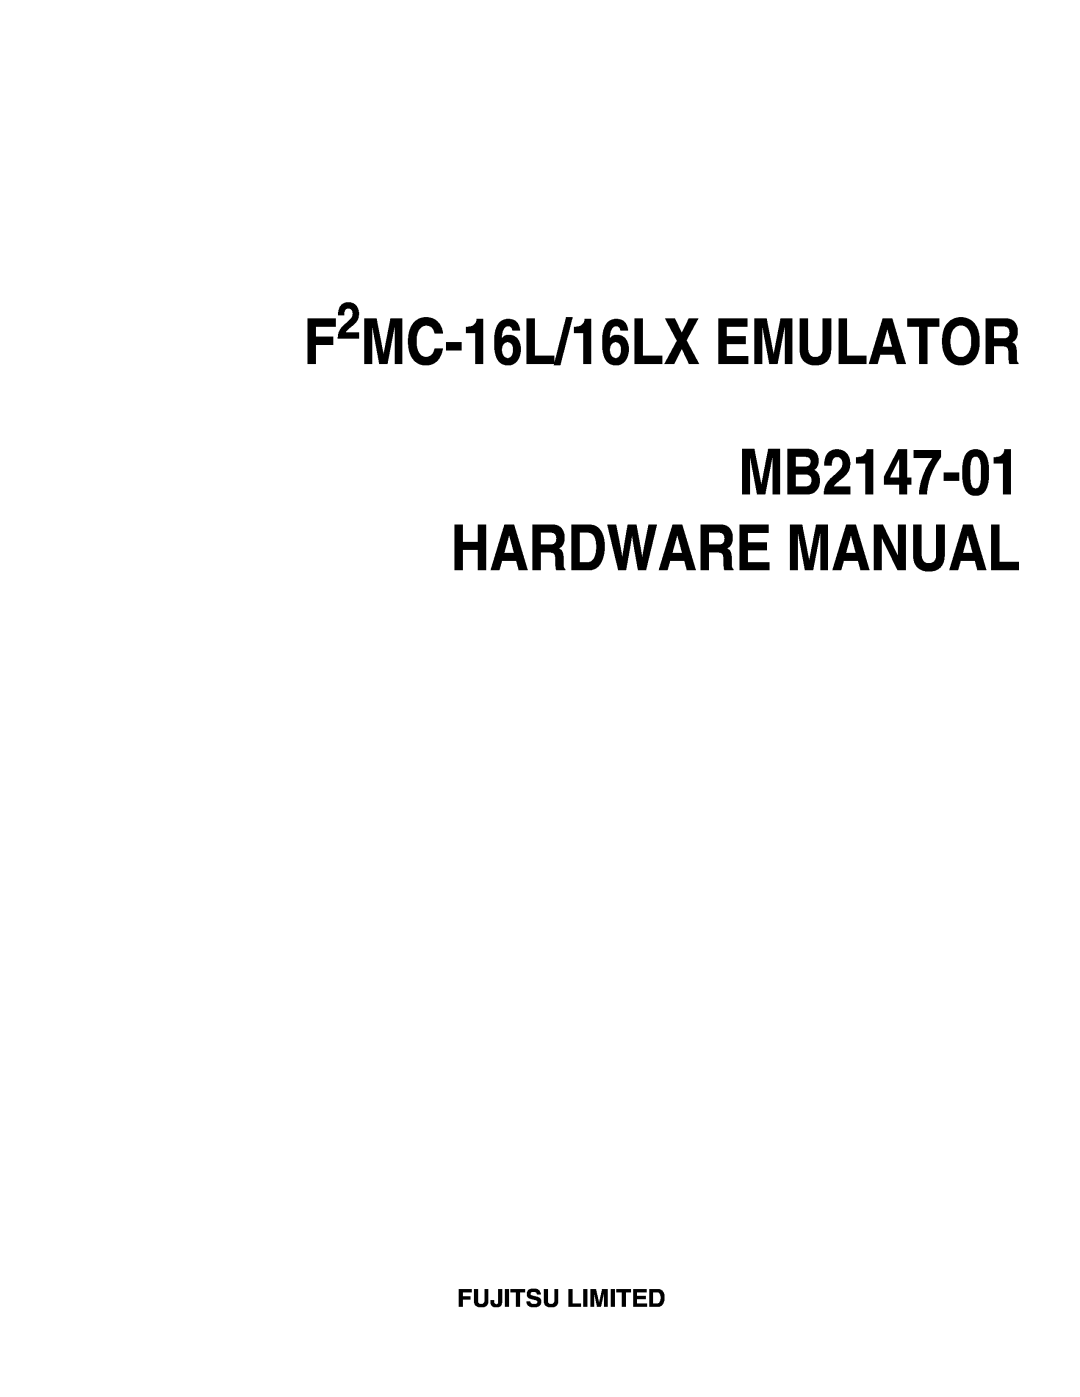 Fujitsu MB2147-01 manual Fujitsu Limited, Hardware Manual, F2MC-16L/16LX EMULATOR 